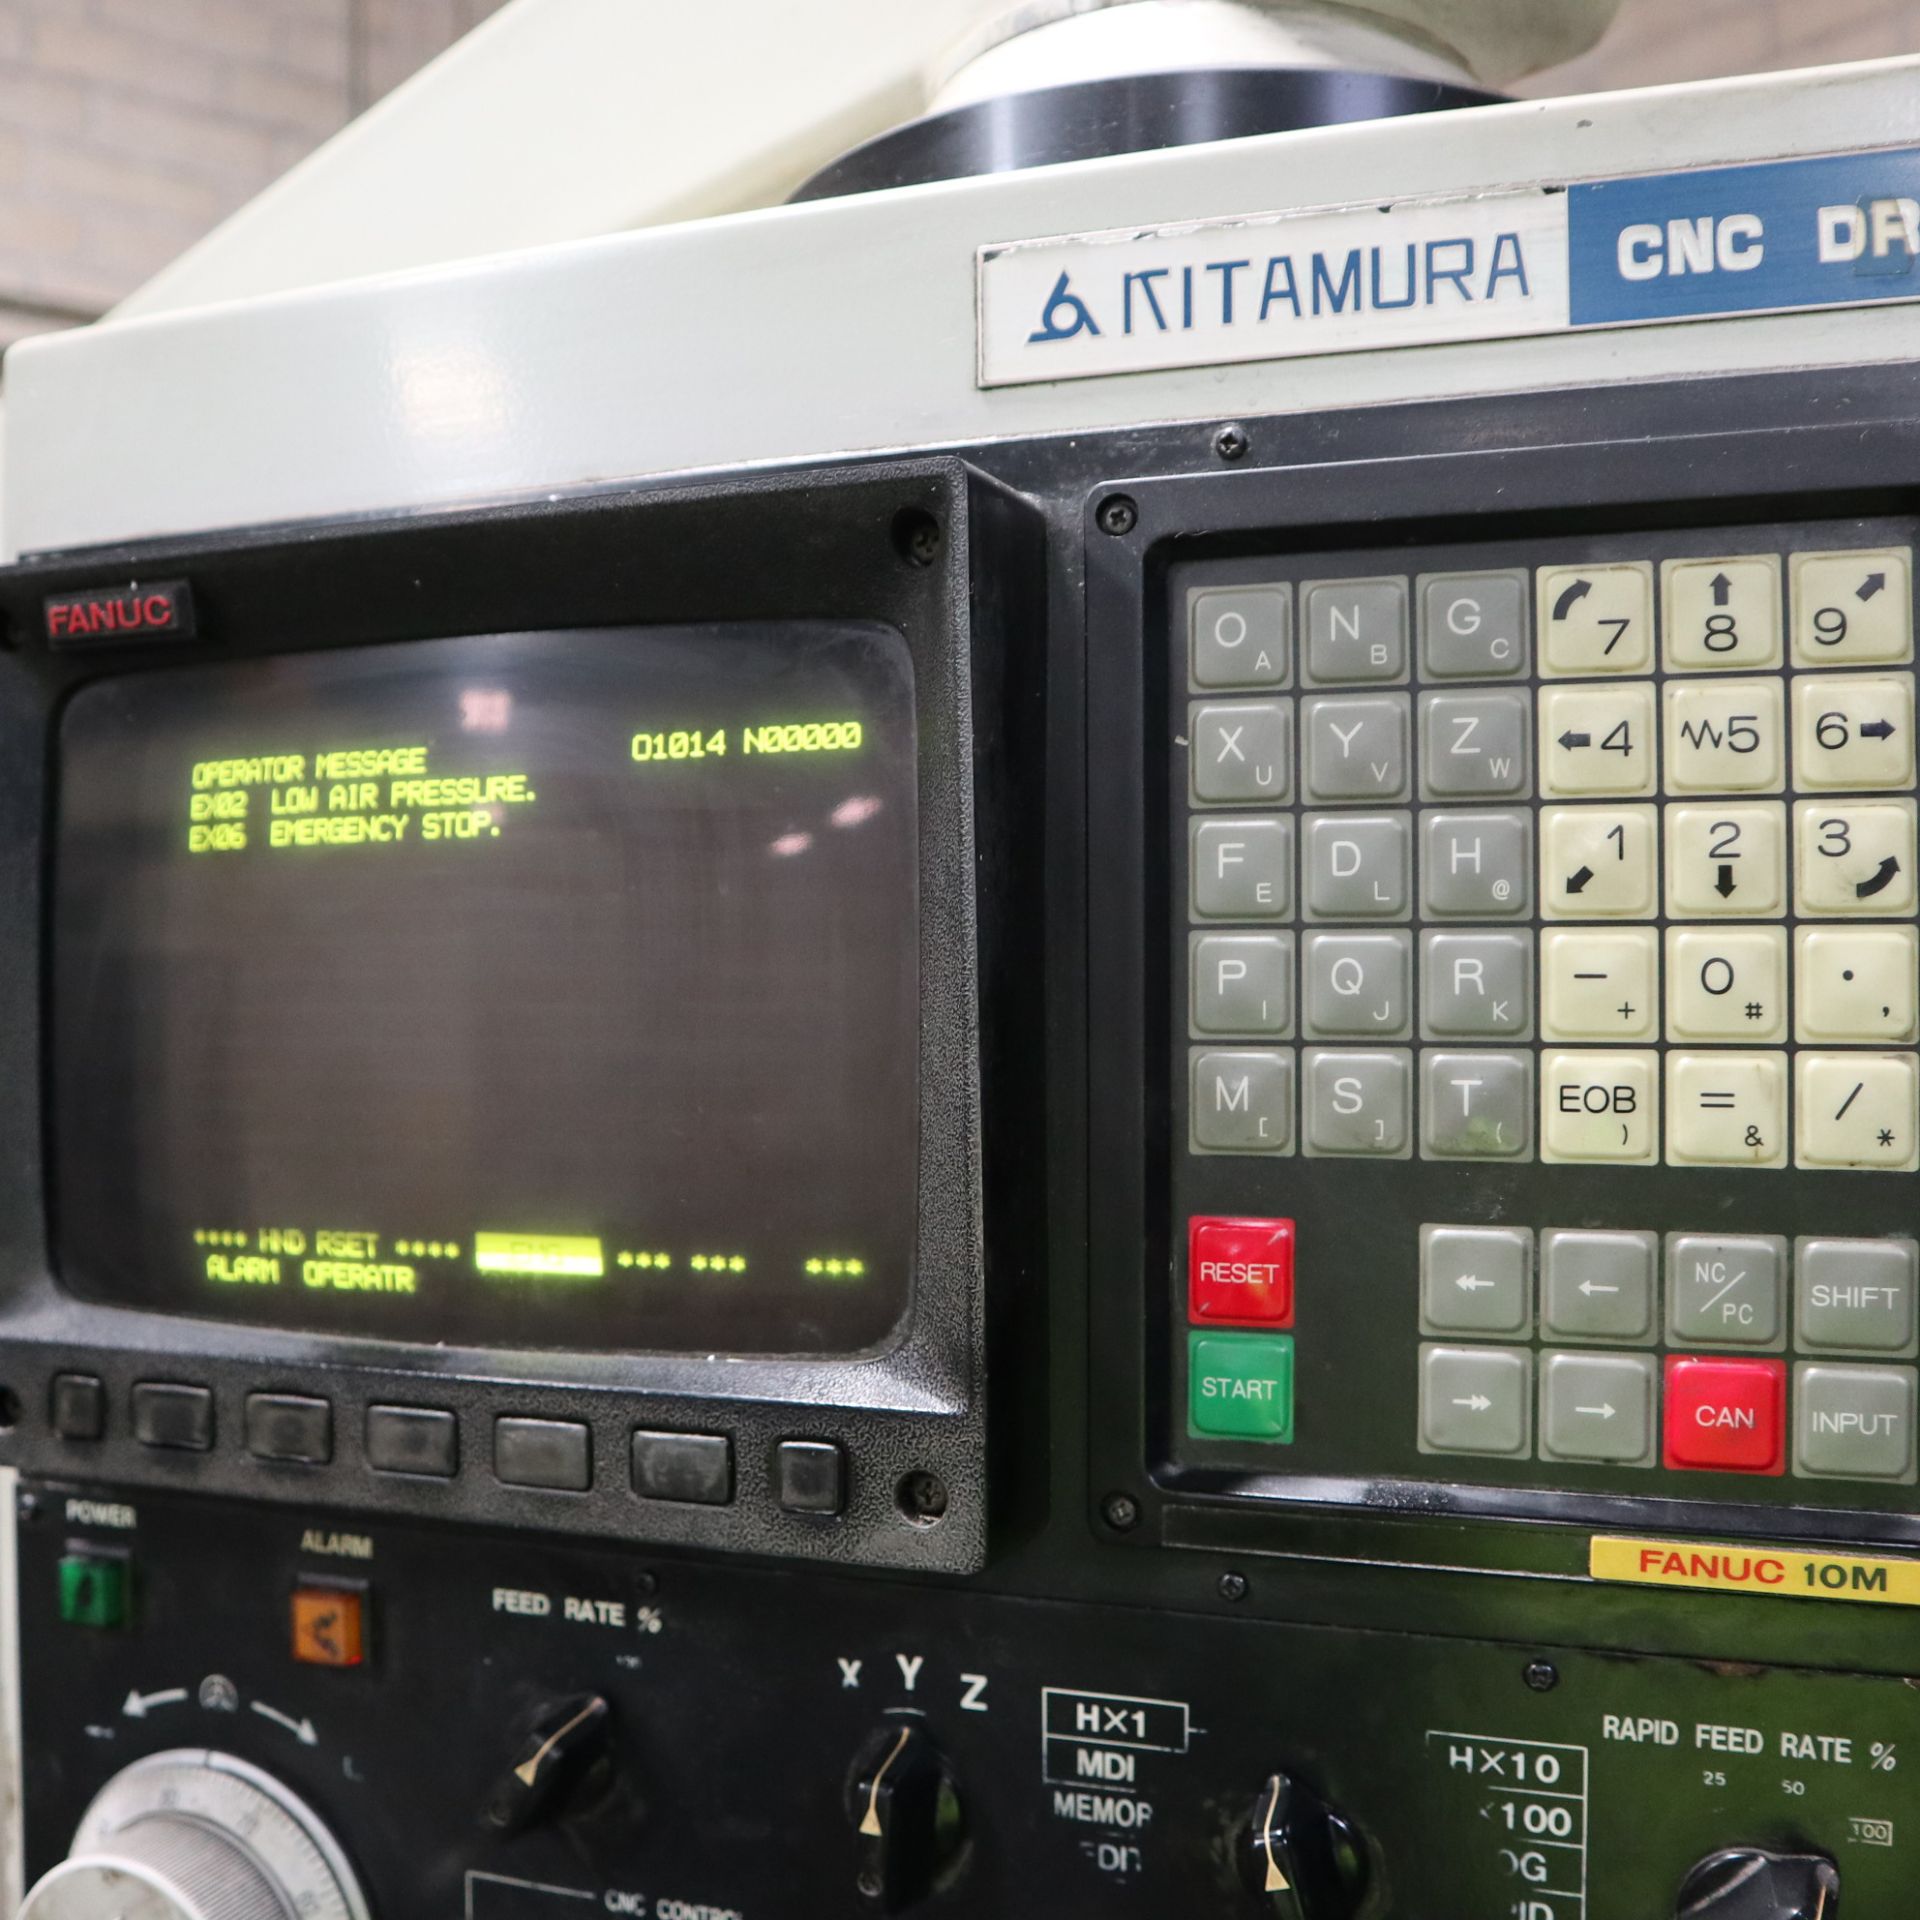 1987 KITAMURA MYCENTER-1 VERTICAL MACHINING CENTER, S/N 01823, FANUC 10M CONTROL, BT35 TOOLING,10, - Image 7 of 13